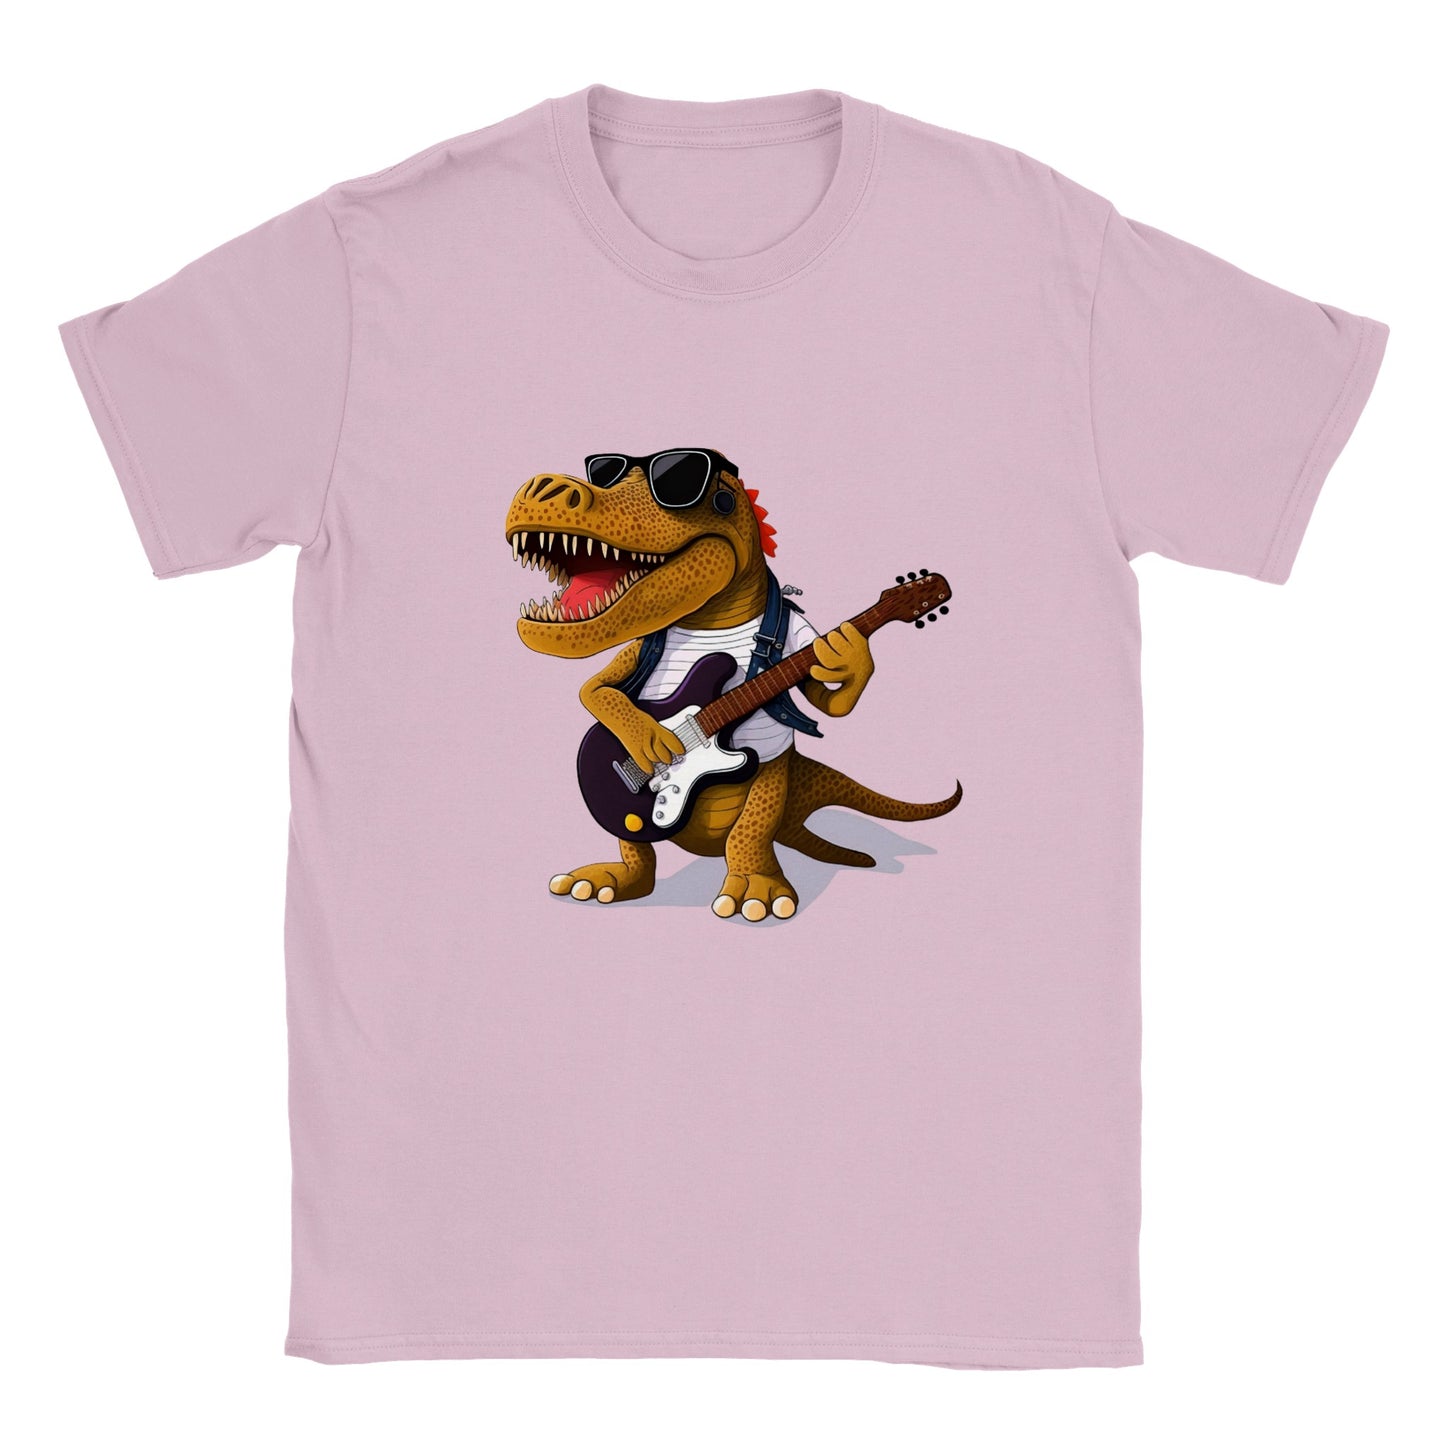 Dino Rockstar: Cool Dino Playing Guitar Classic Kids Crewneck T-shirt